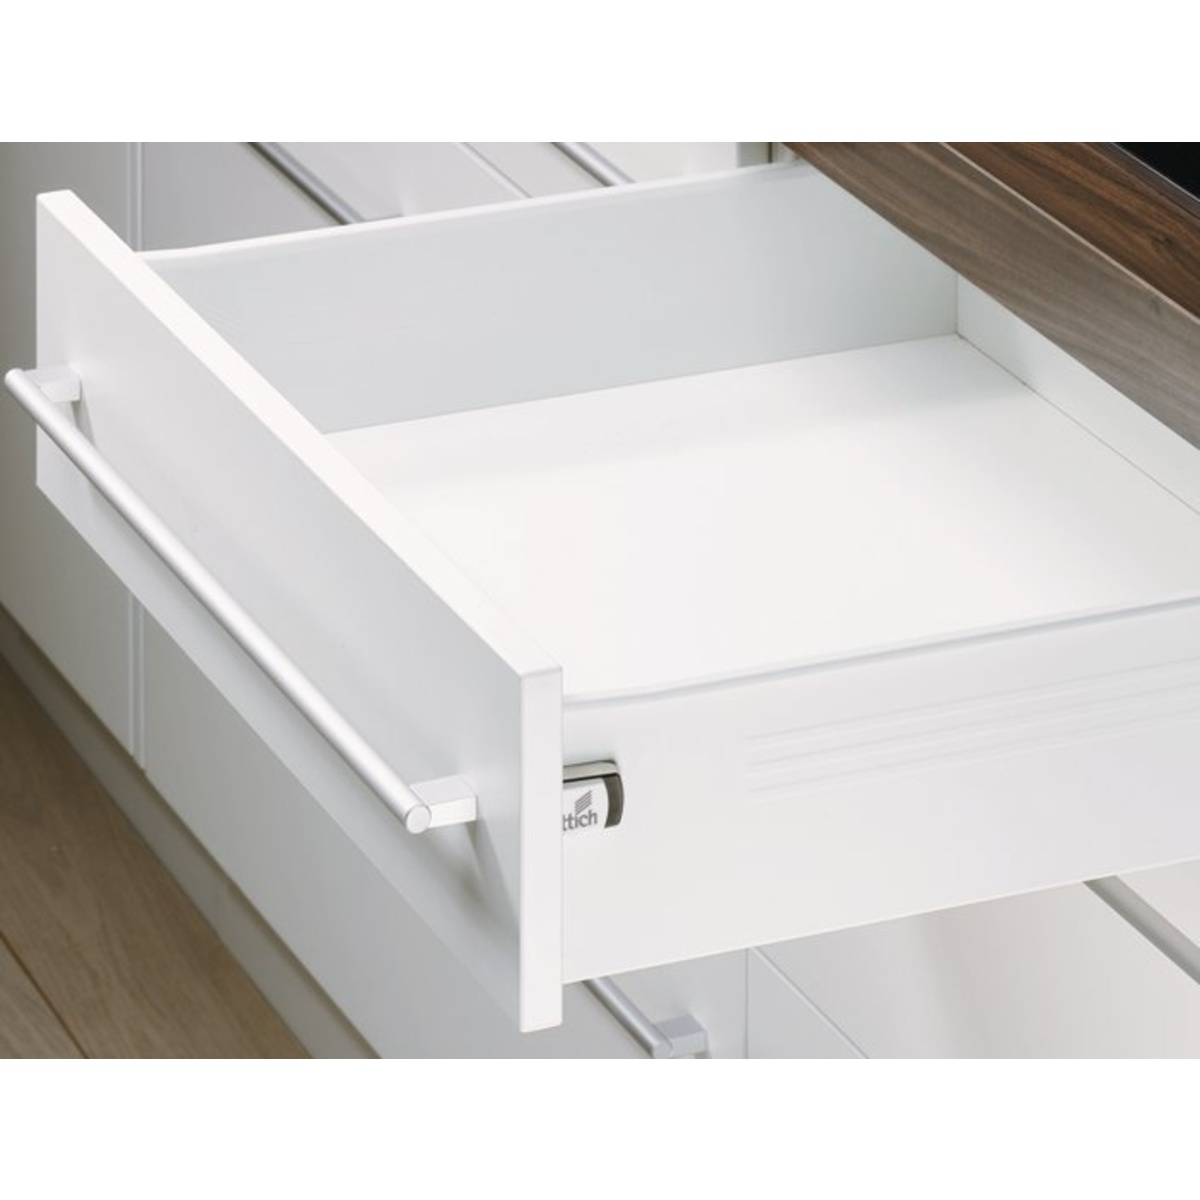 MultiTech Drawer set, System height 118 / Nominal length 450, white ...